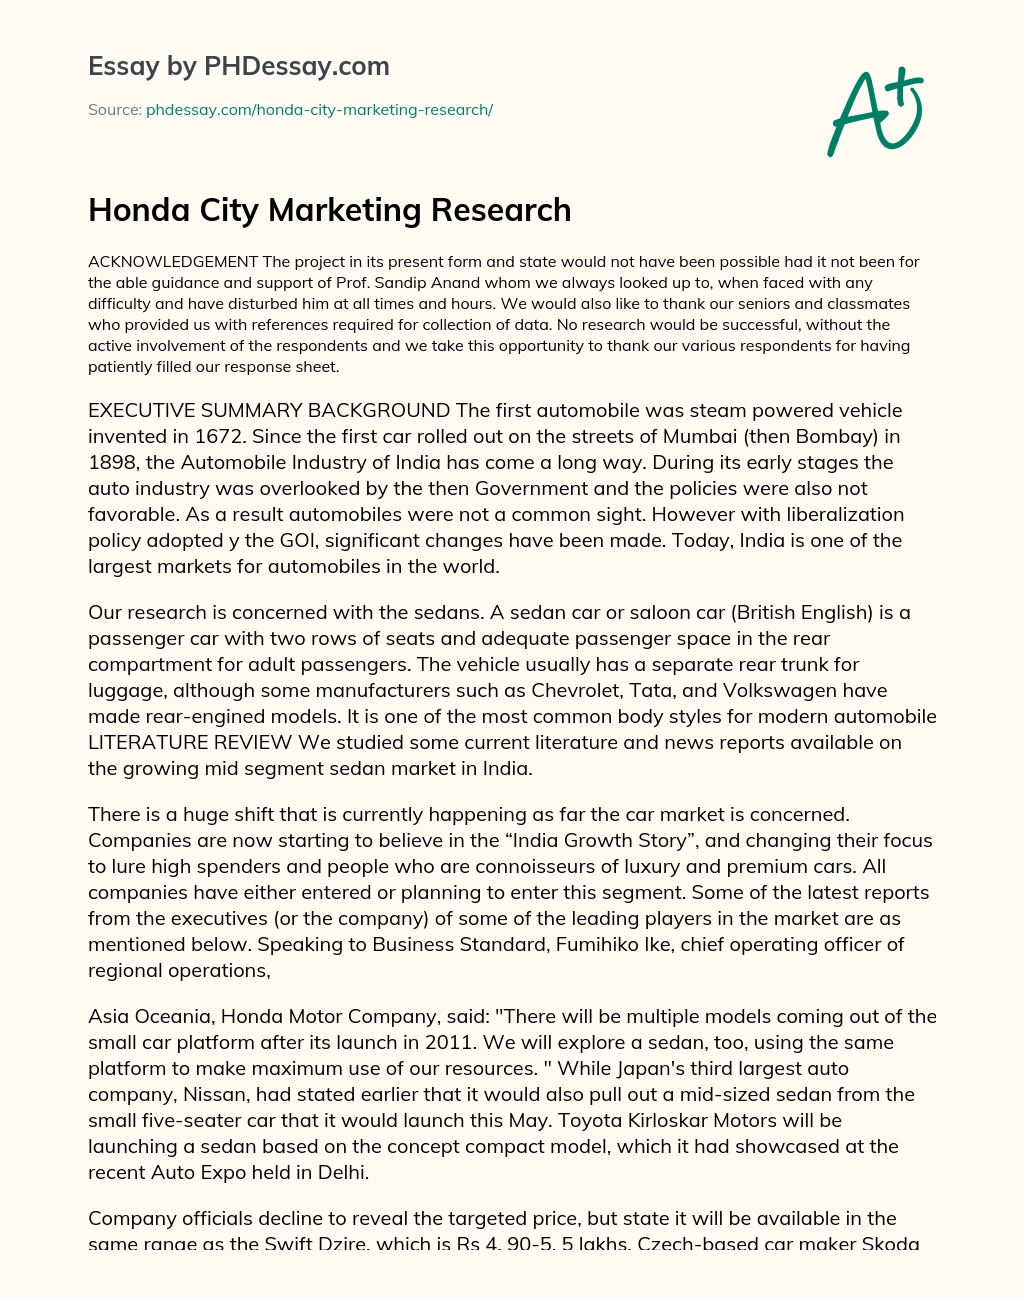 Honda City Marketing Research essay